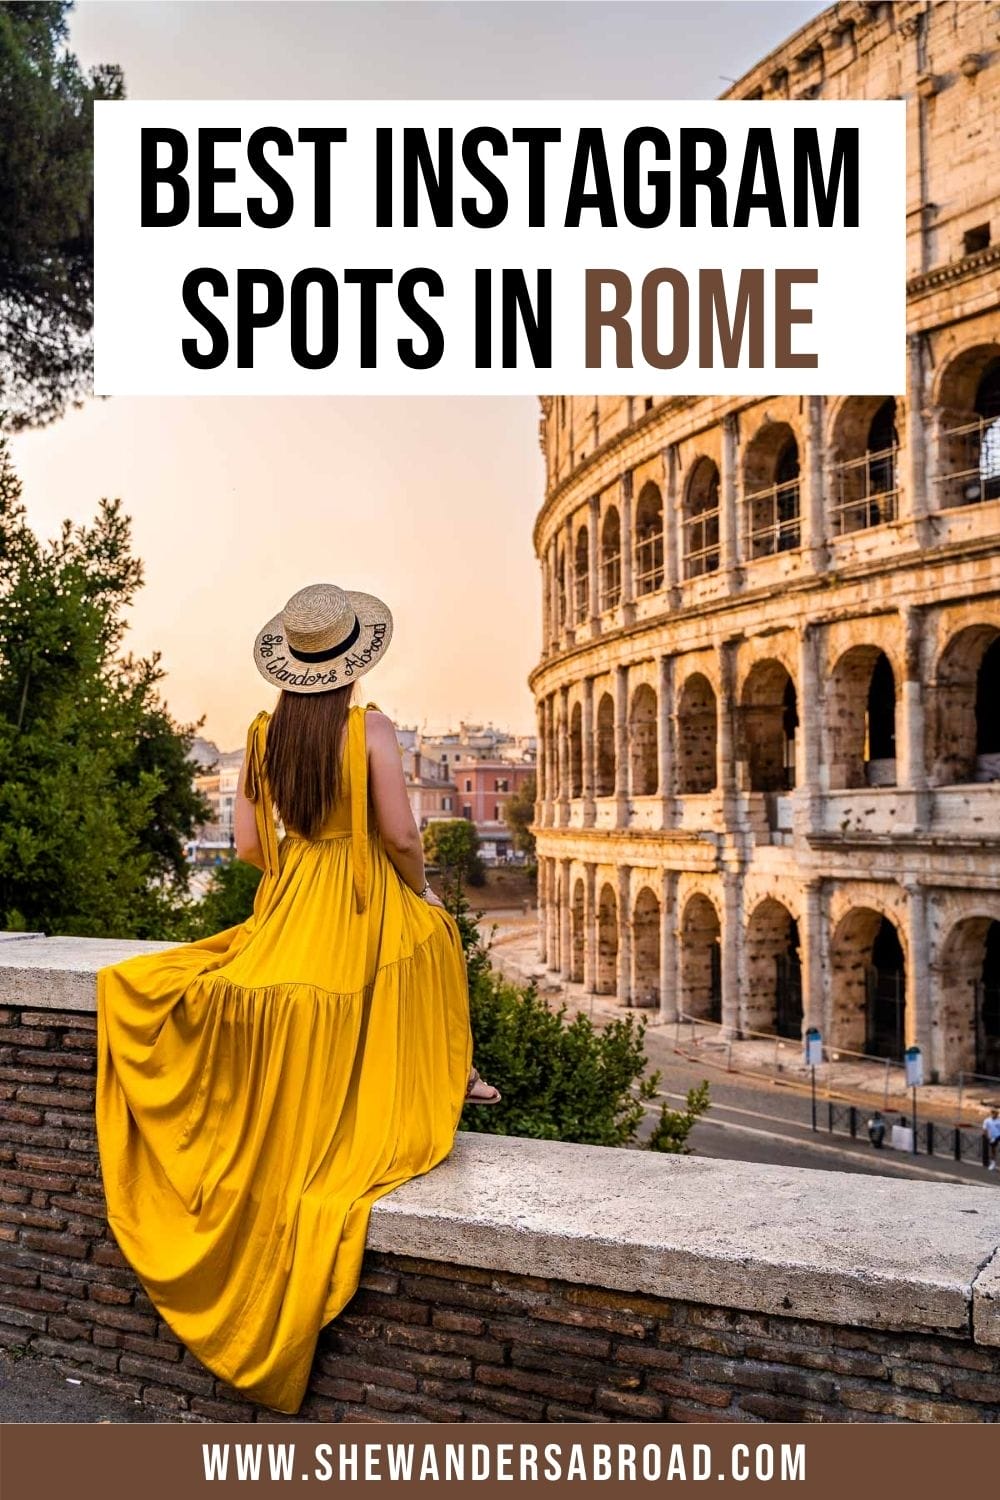 15 Best Rome Instagram Spots for Stunning Photos